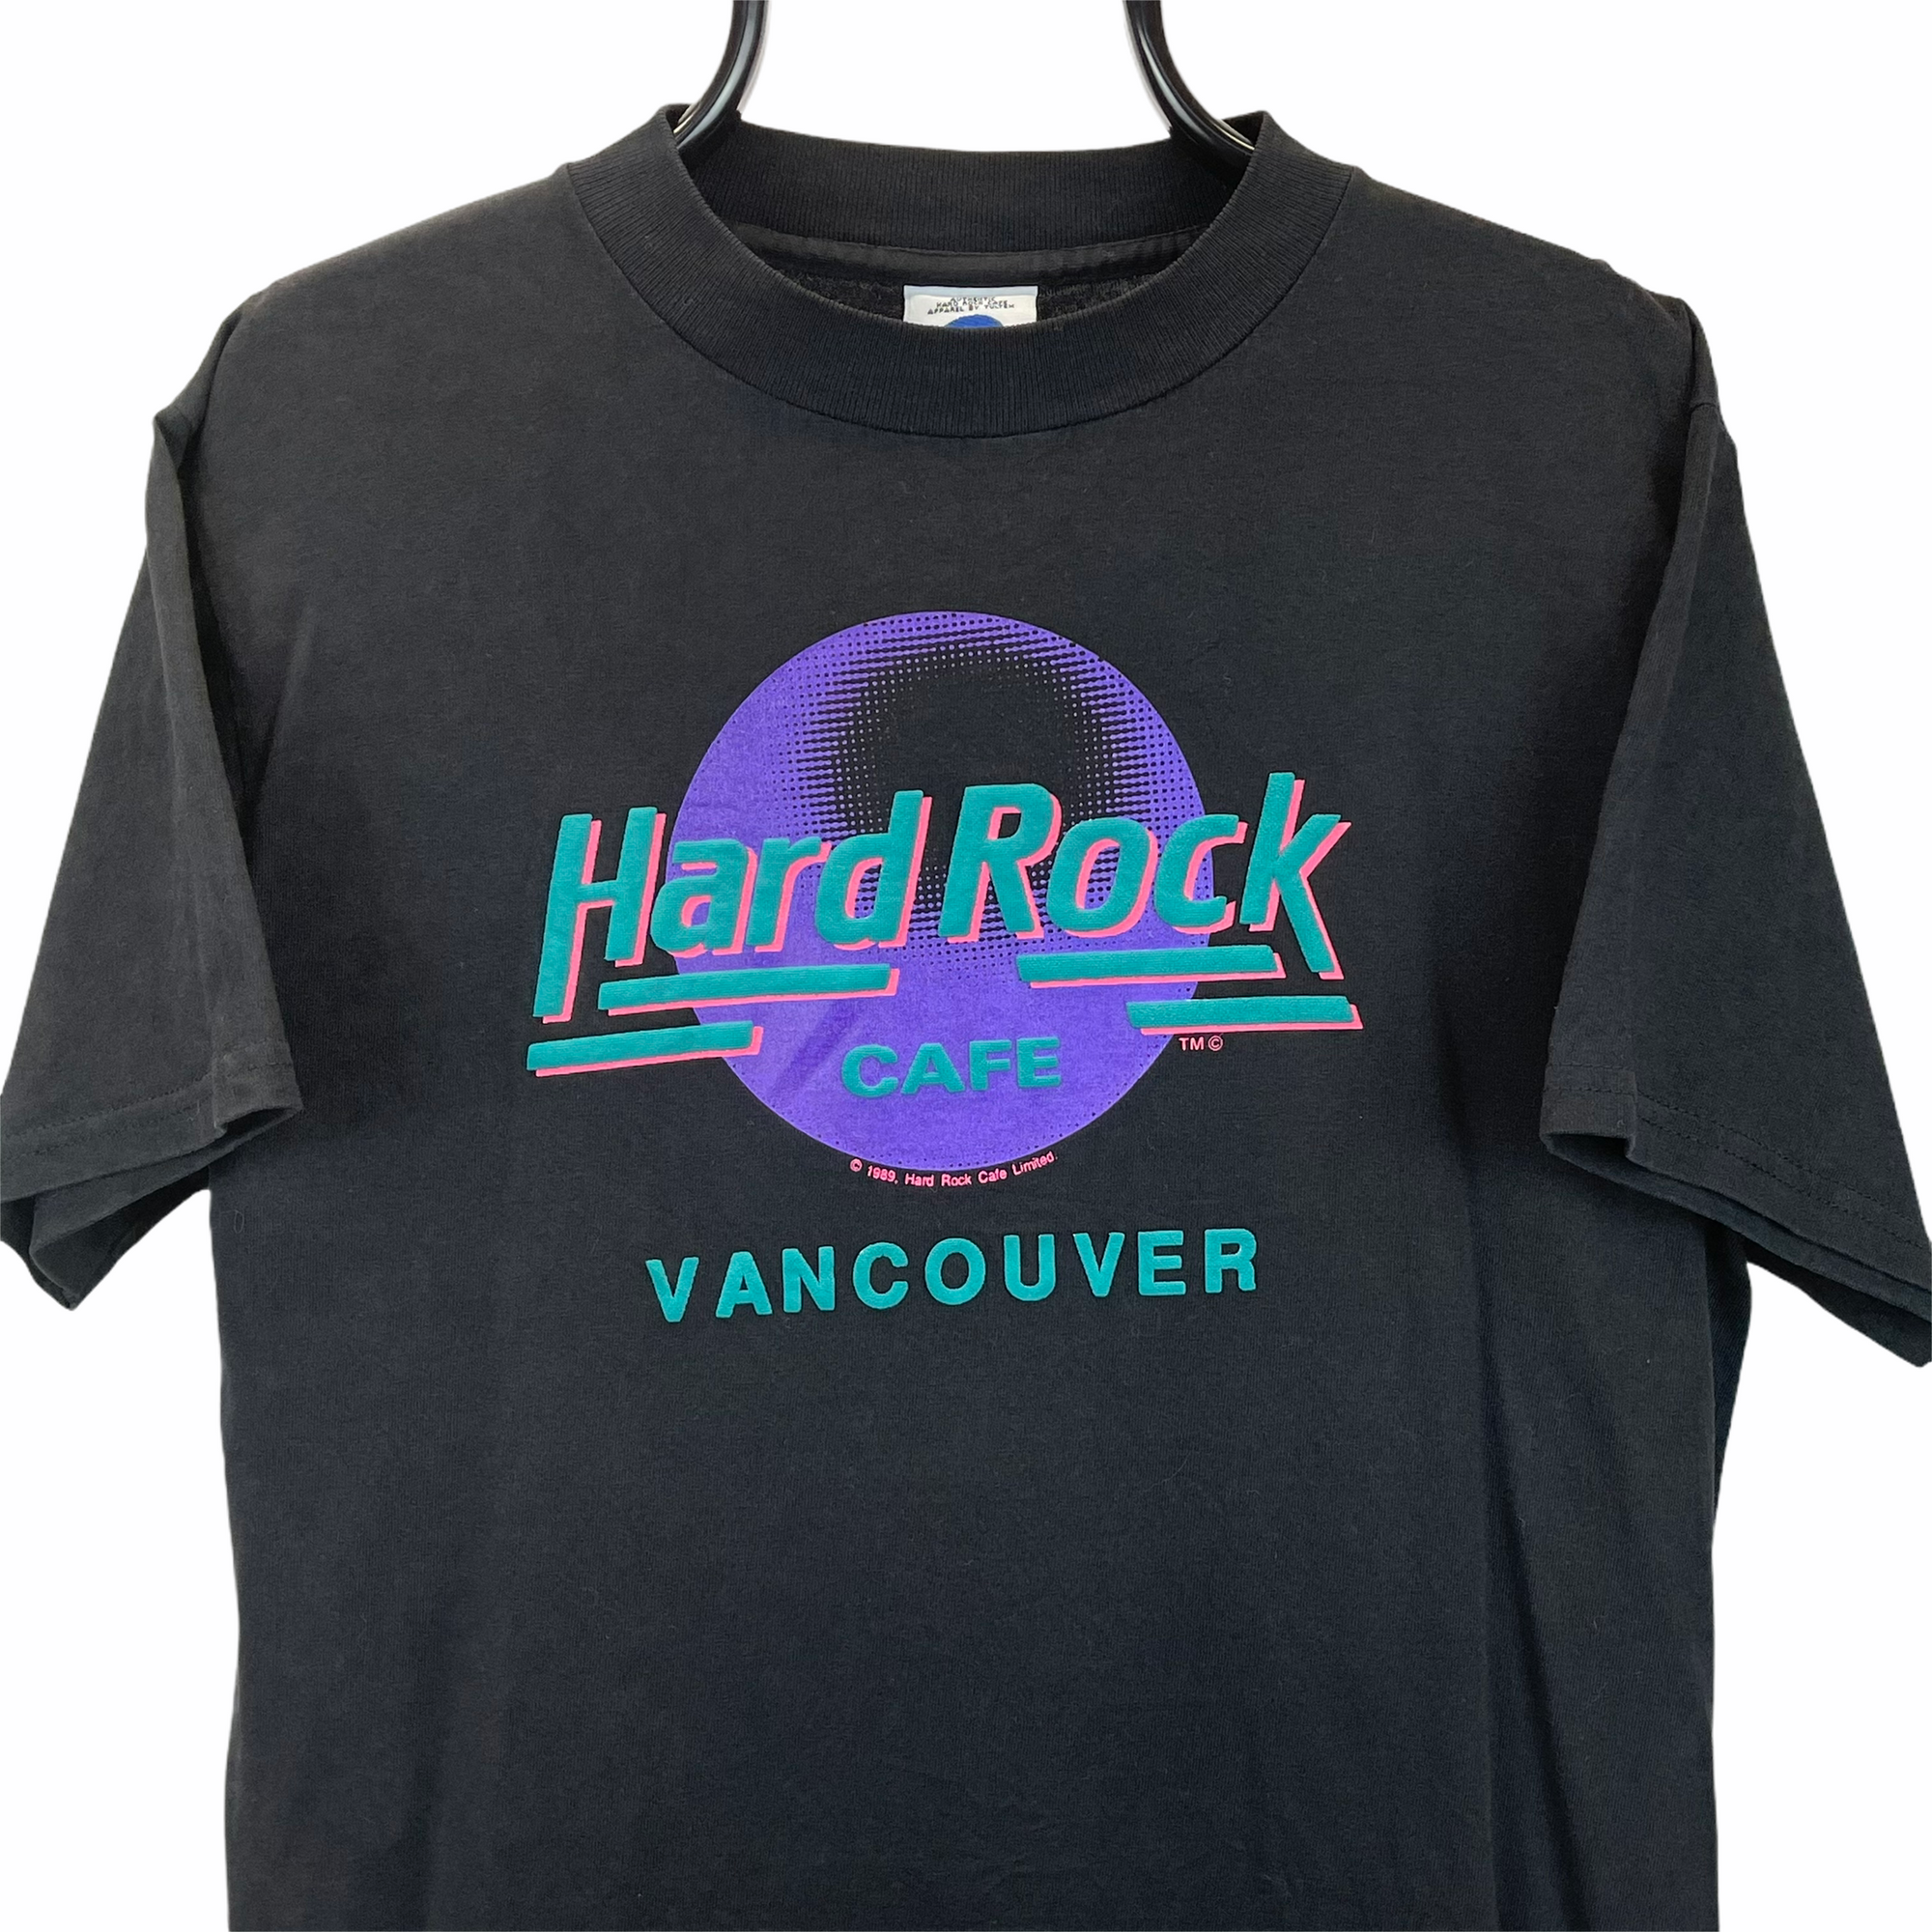 Vintage 90s Hard Rock Cafe Vancouver Tee - Men's Medium/Women's Large